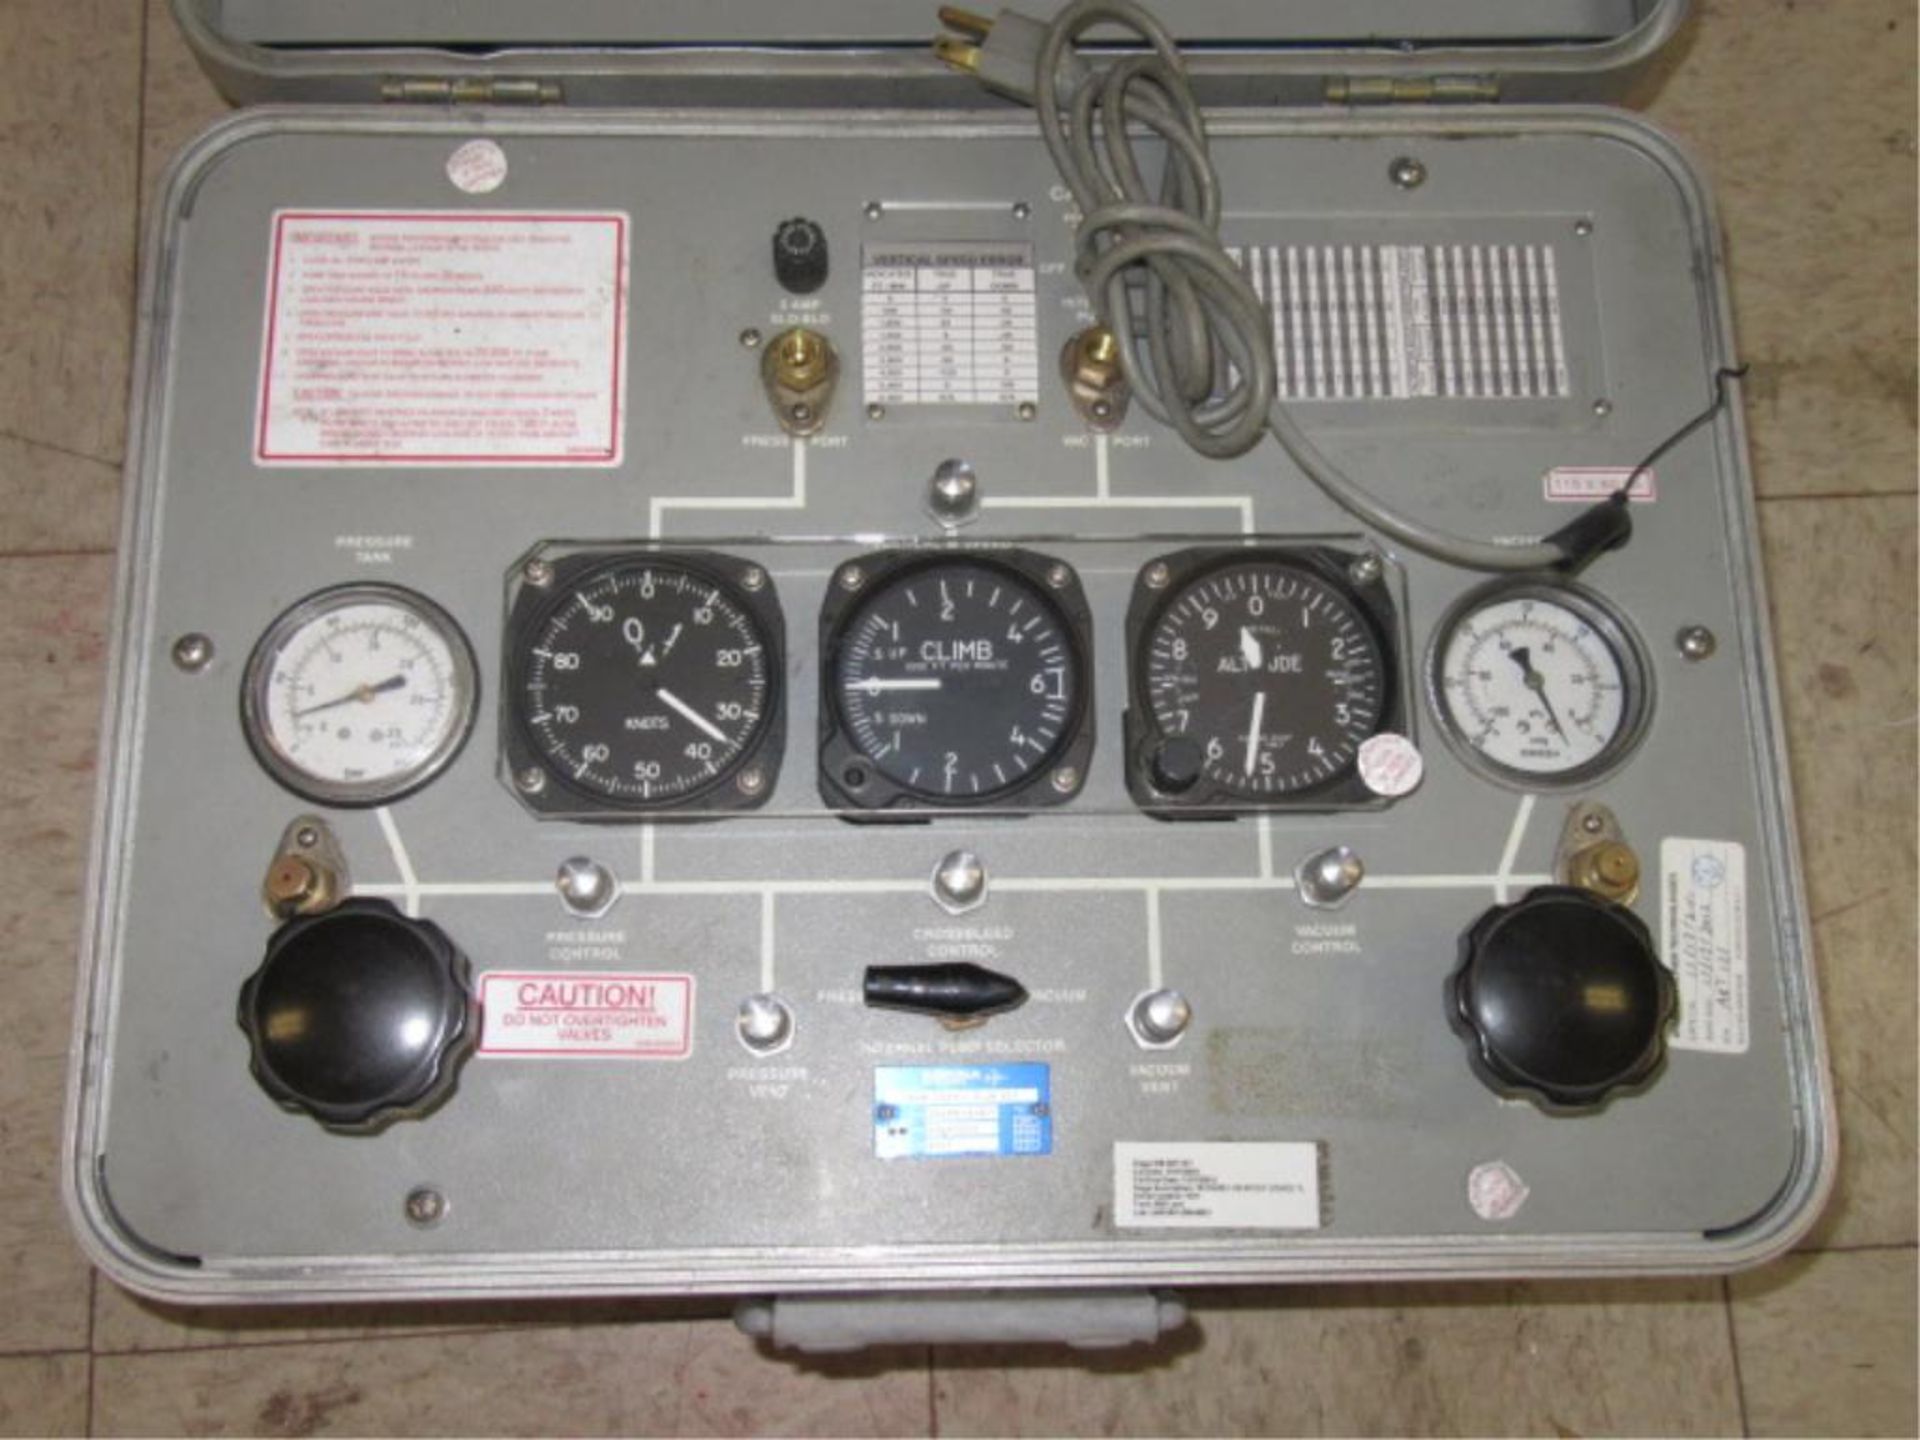 Test Equipment - Image 2 of 3